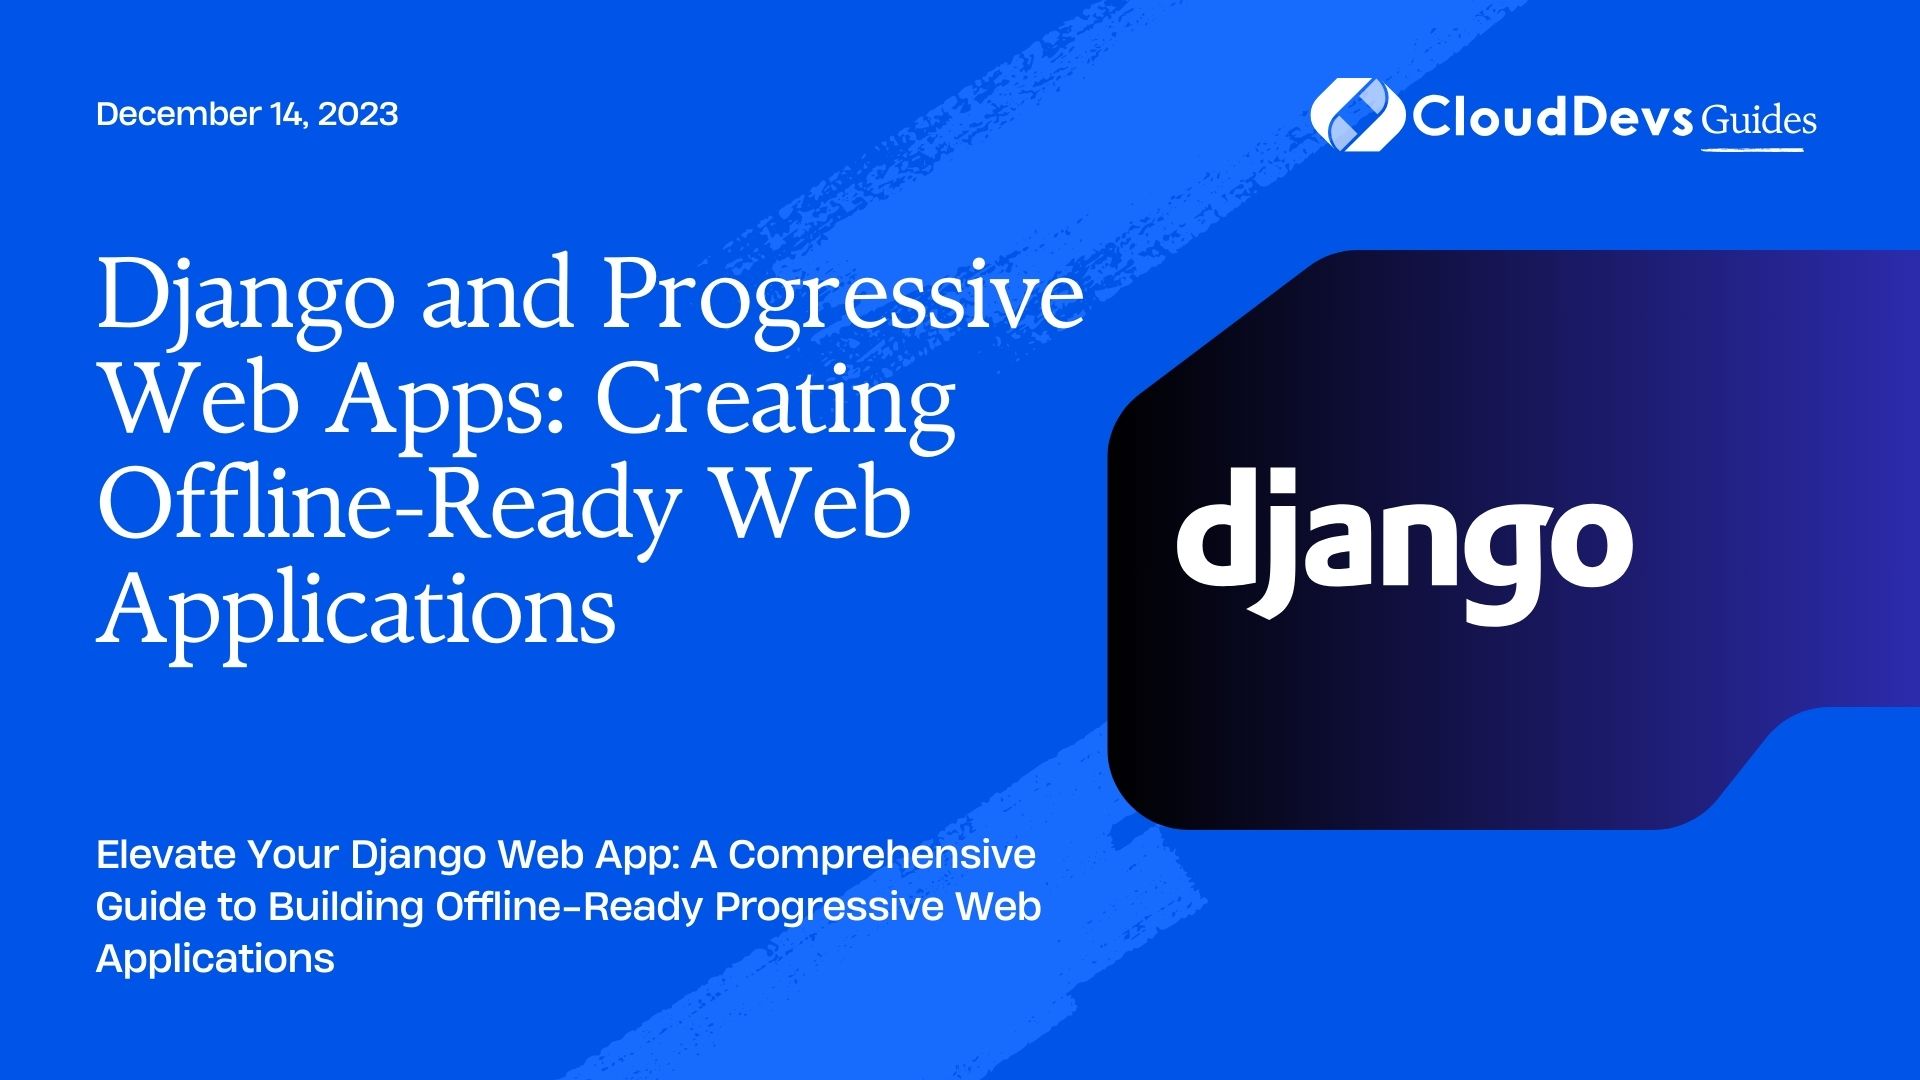 Django and Progressive Web Apps: Creating Offline-Ready Web Applications